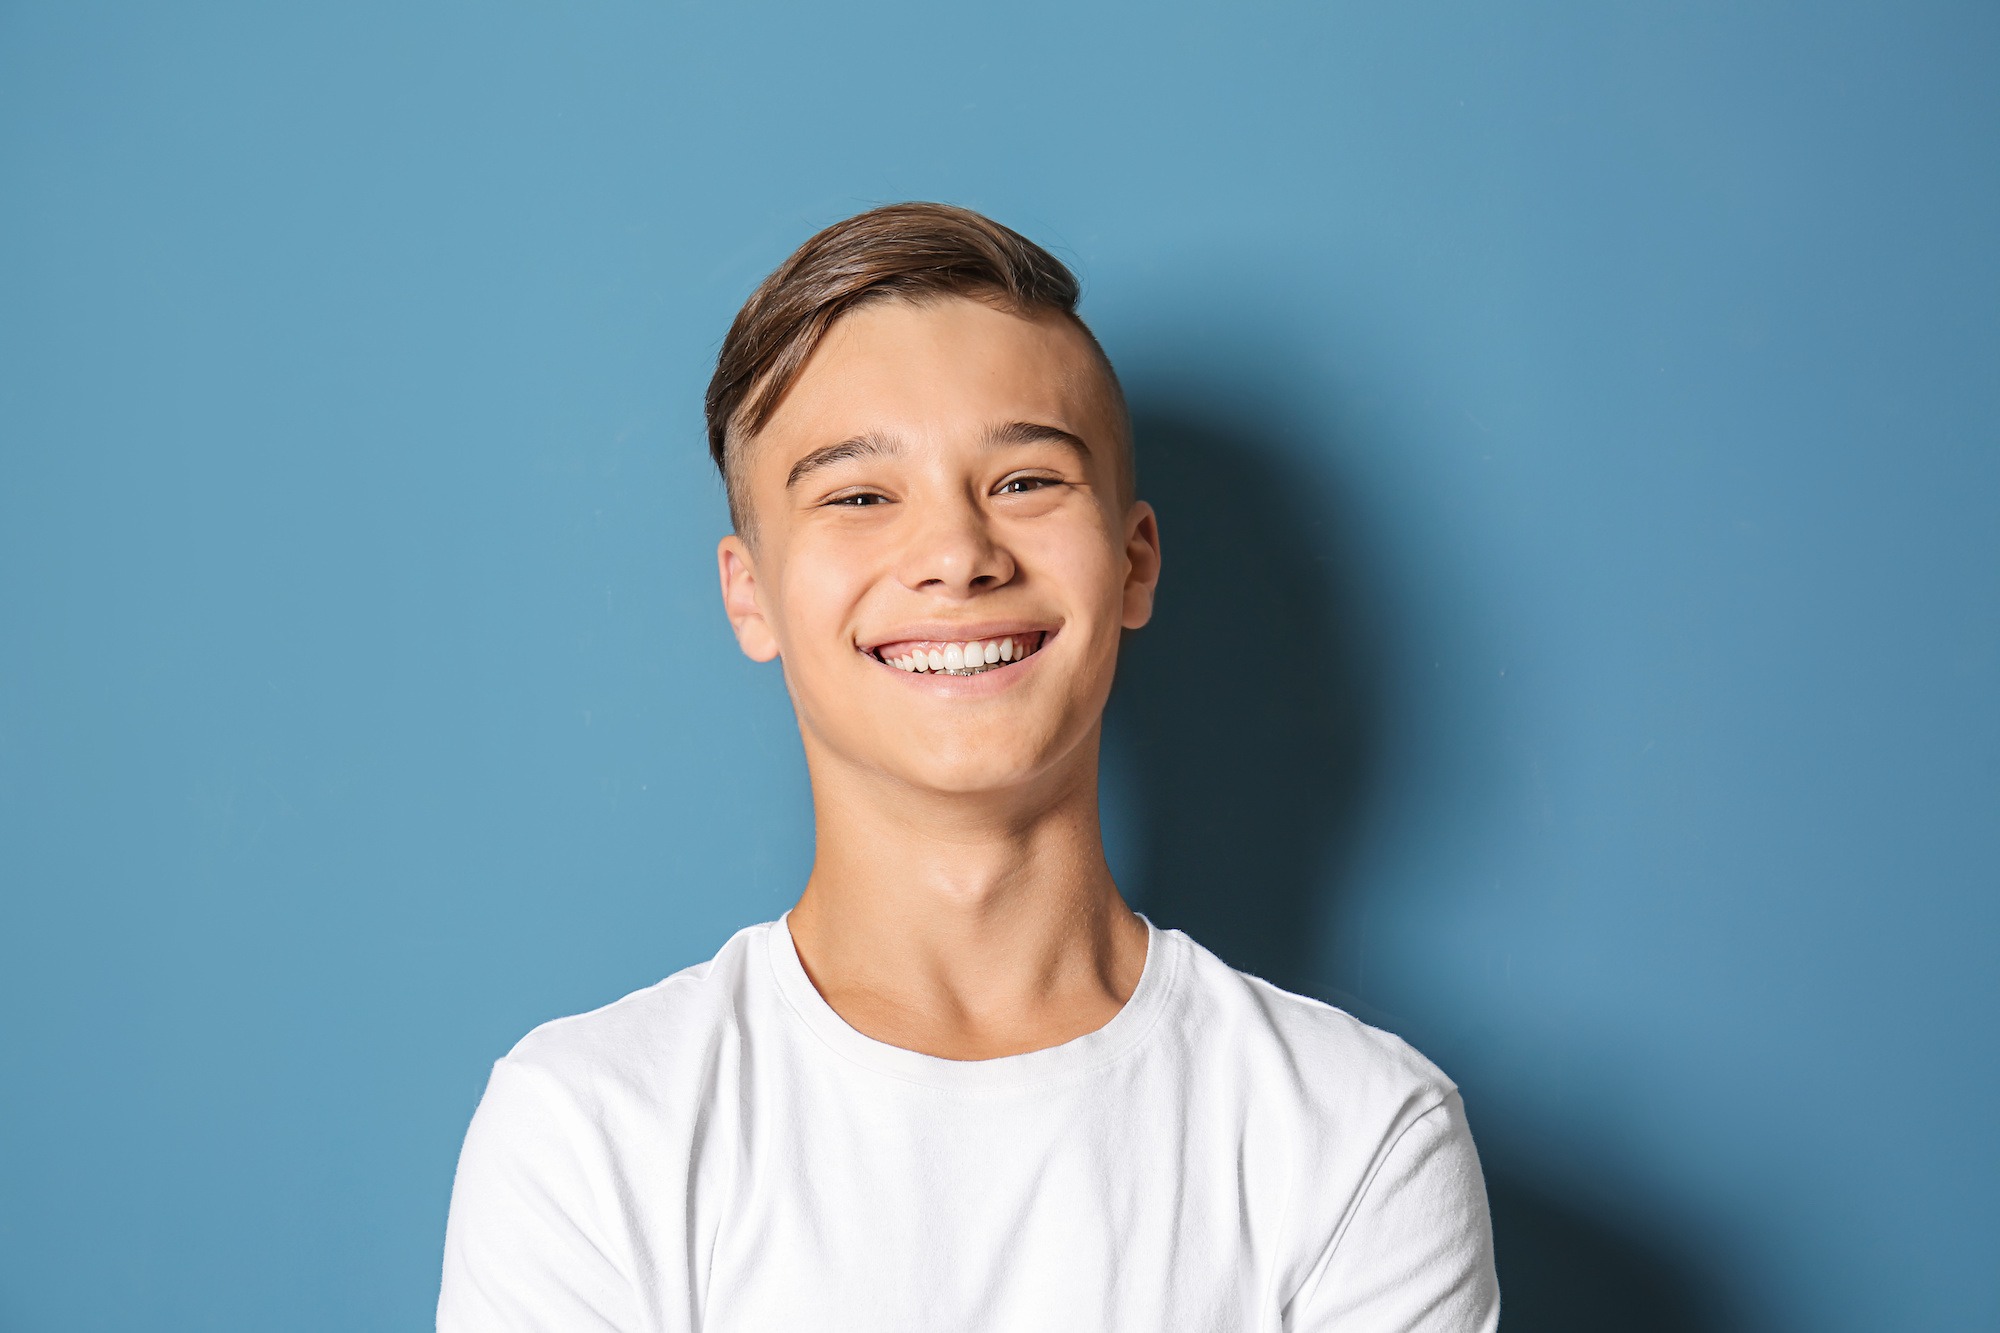 Orthodontics for Teens